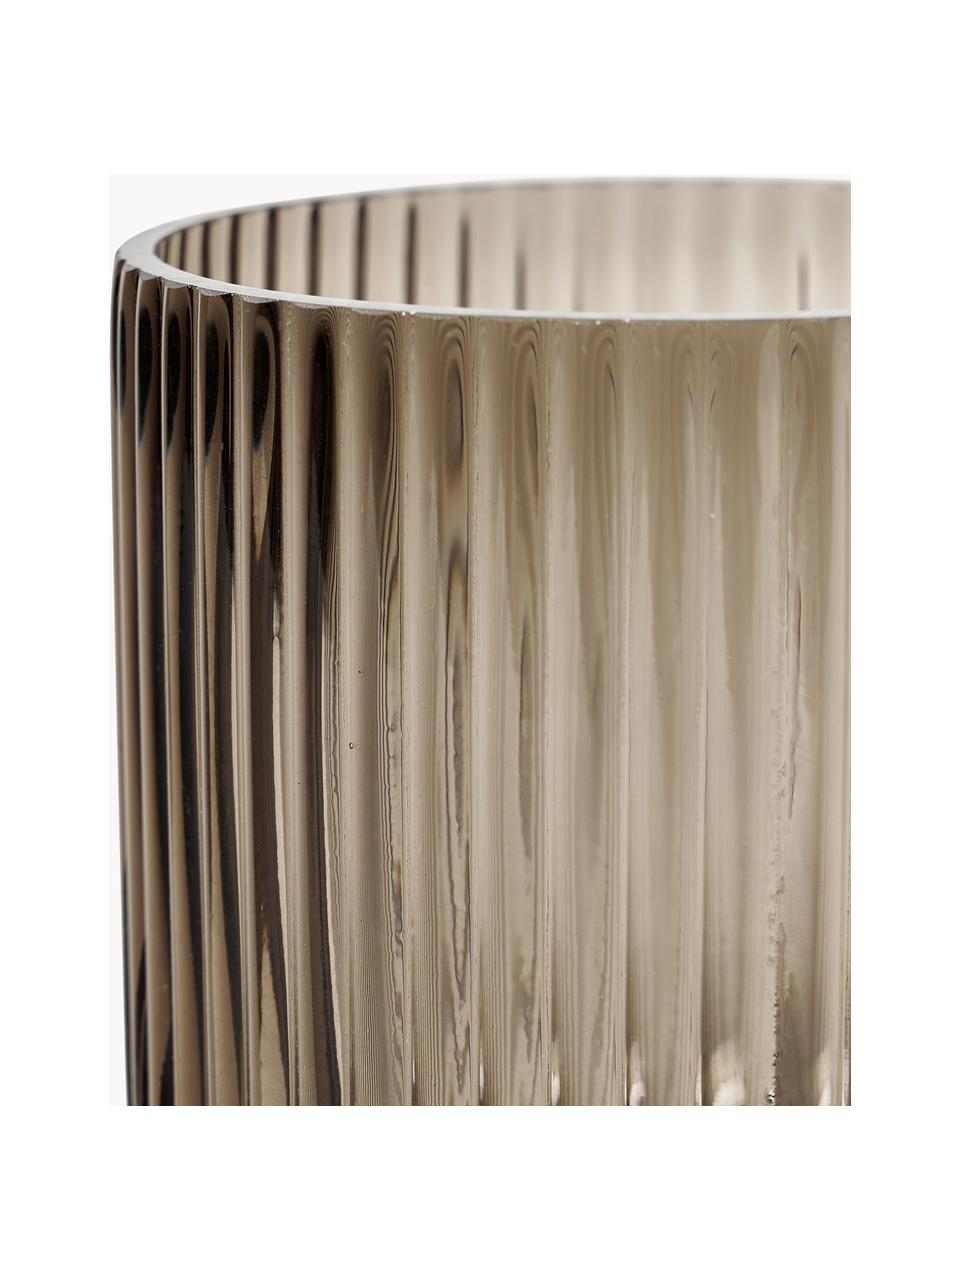 Vase en verre Simple Stripe, haut. 14 cm, Verre, Grège, translucide, Ø 12 x haut. 14 cm